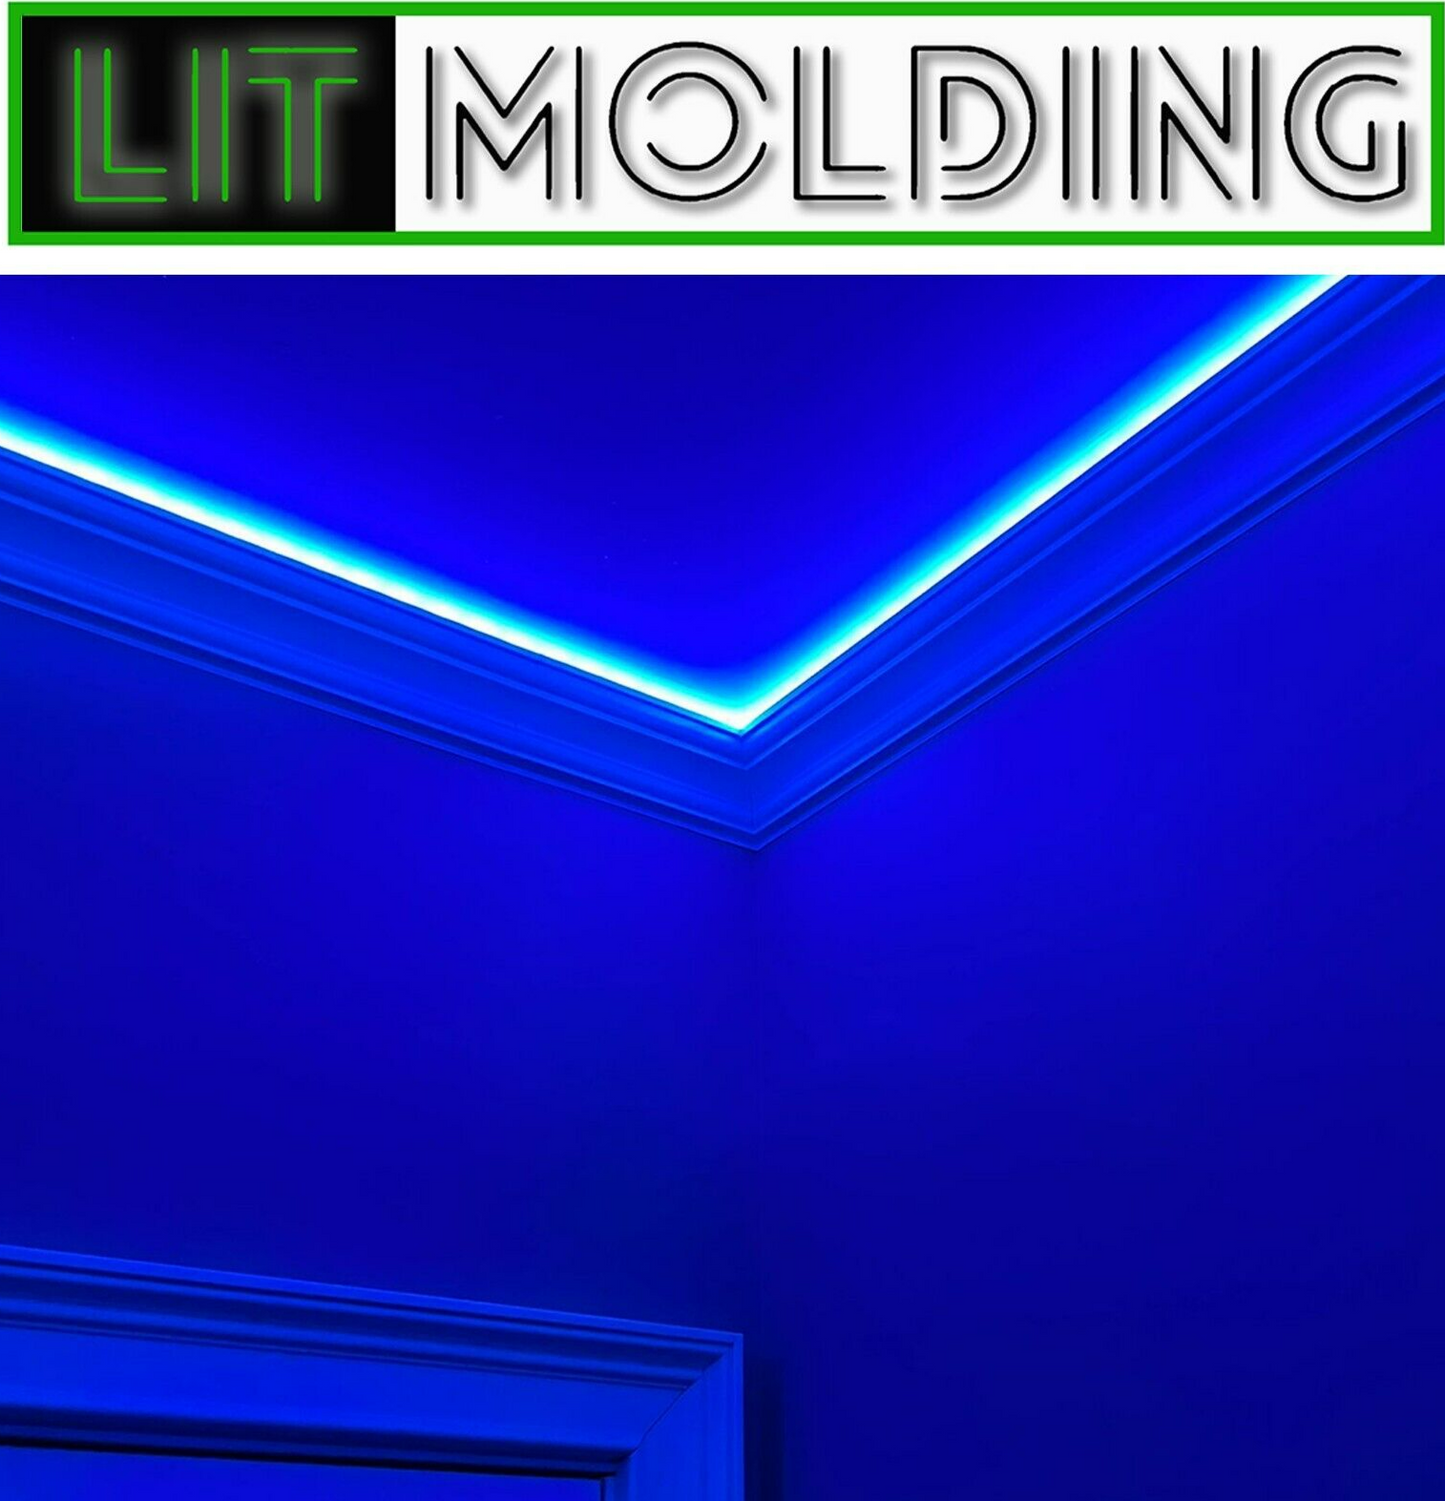 Lit Molding